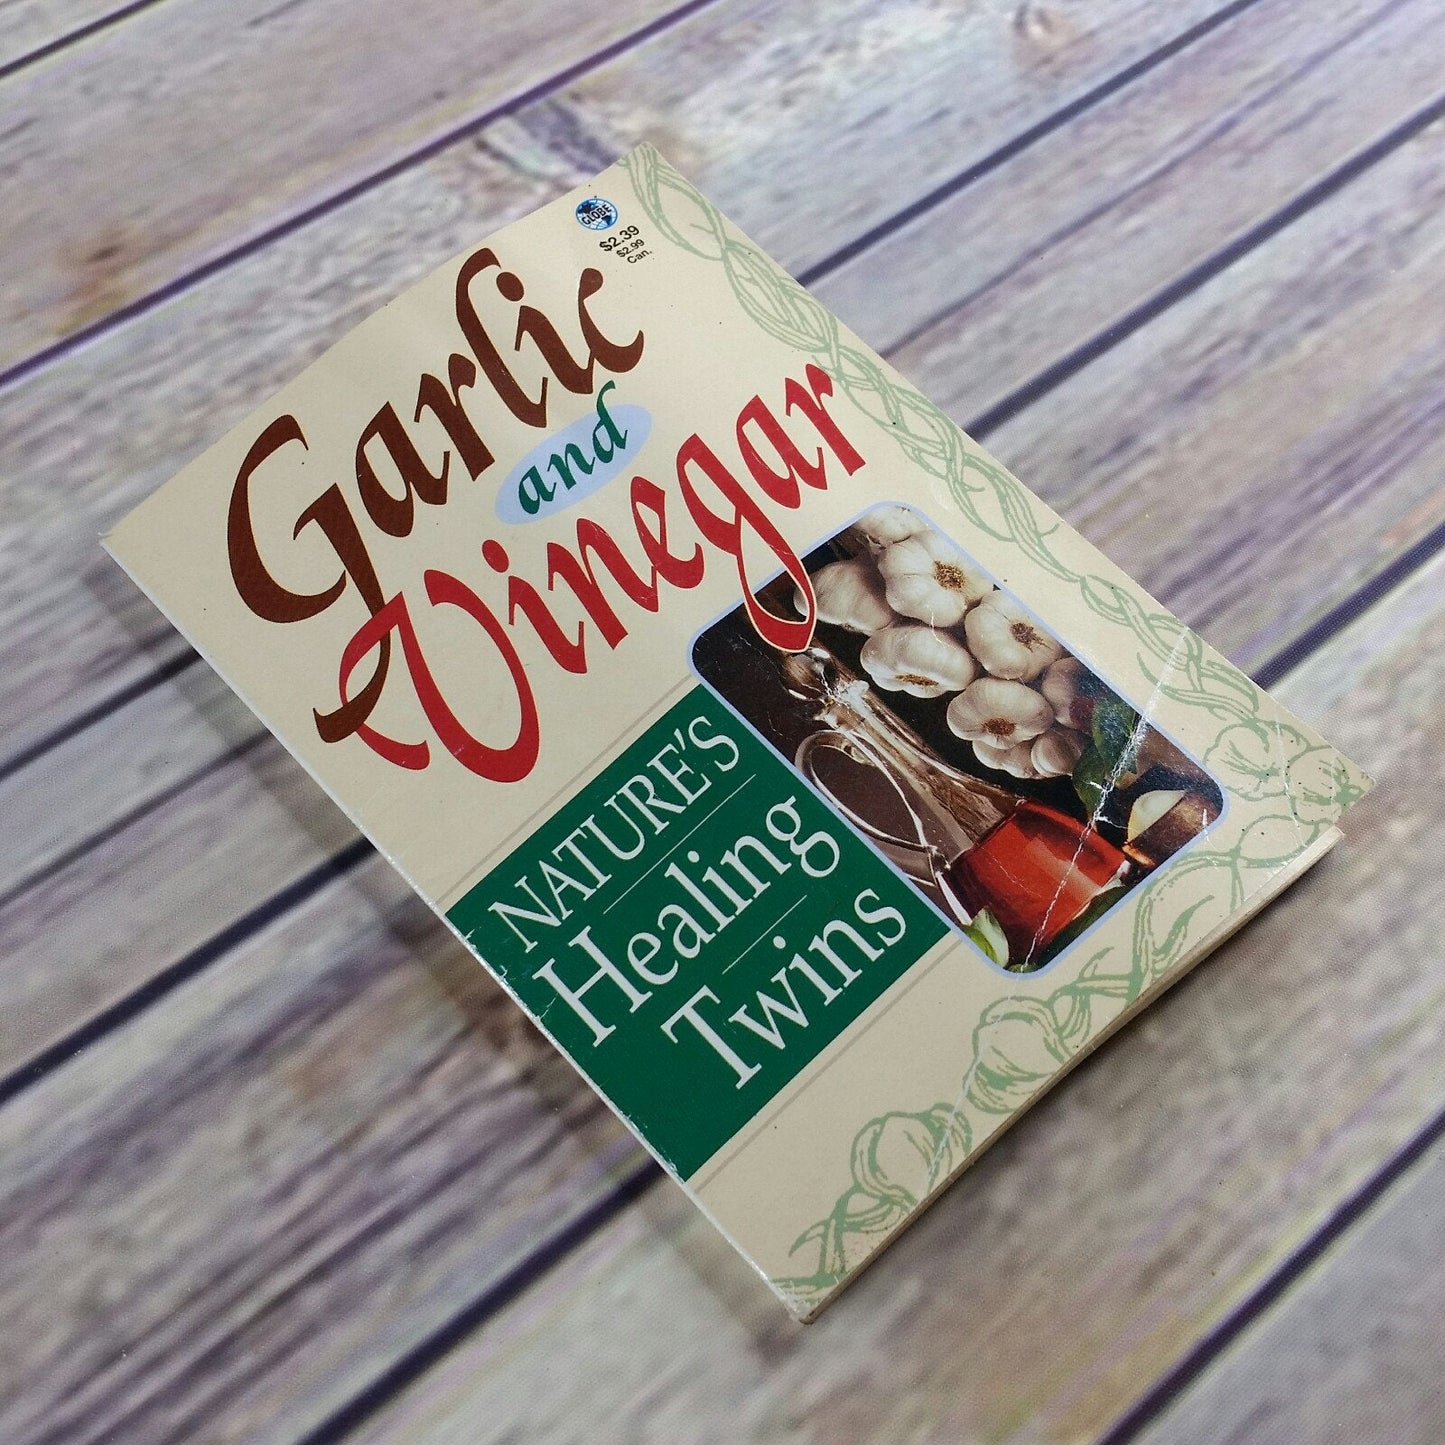 Vintage Cookbook Garlic and Vinegar Natures Healing Twins Julia Charles 2000 Paperback